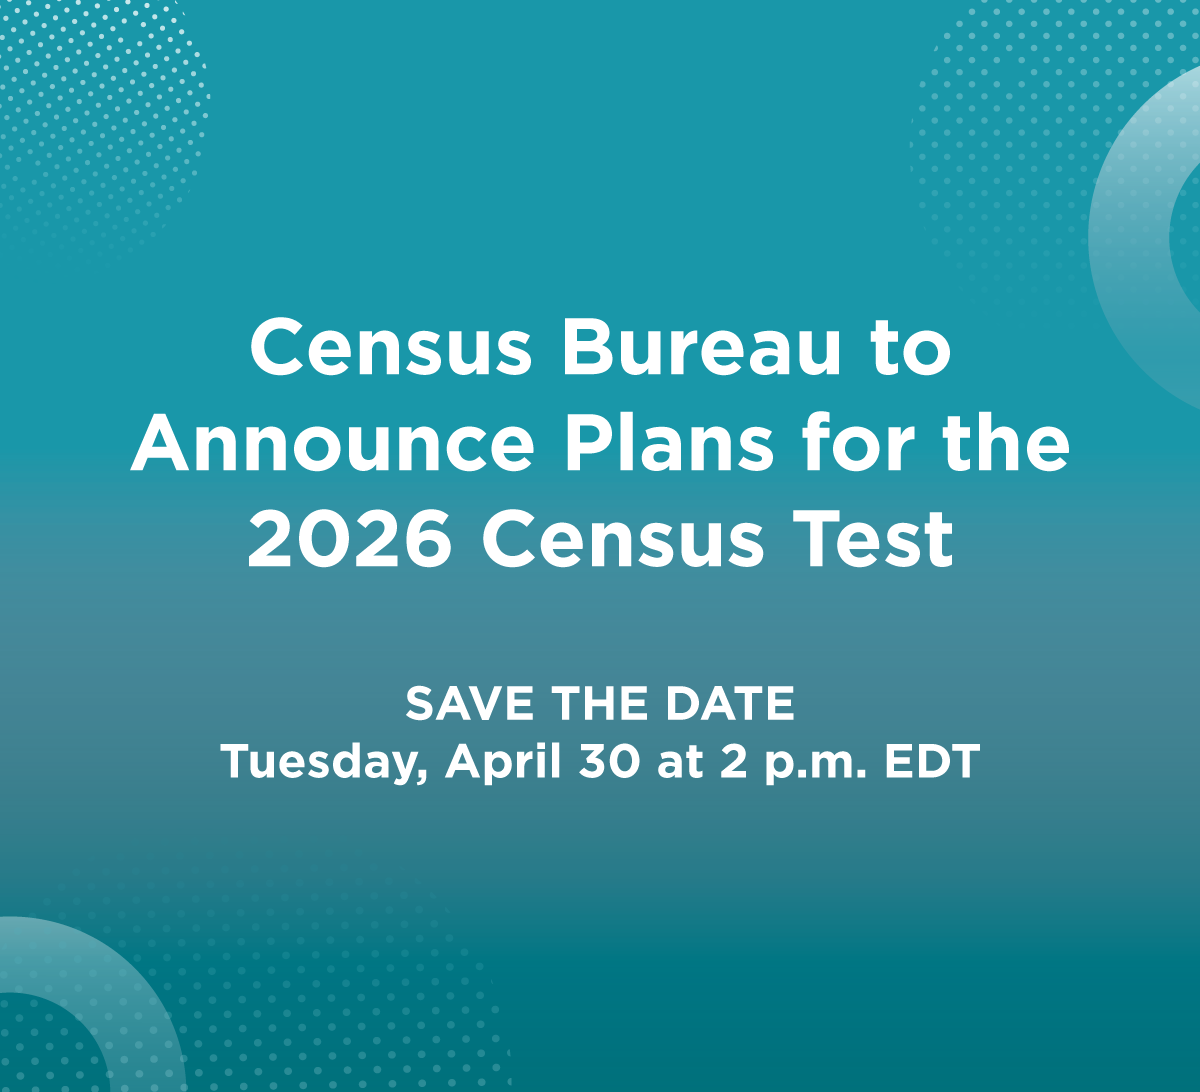 Image: Census Bureau to Announce Plans for the 2026 Census Test